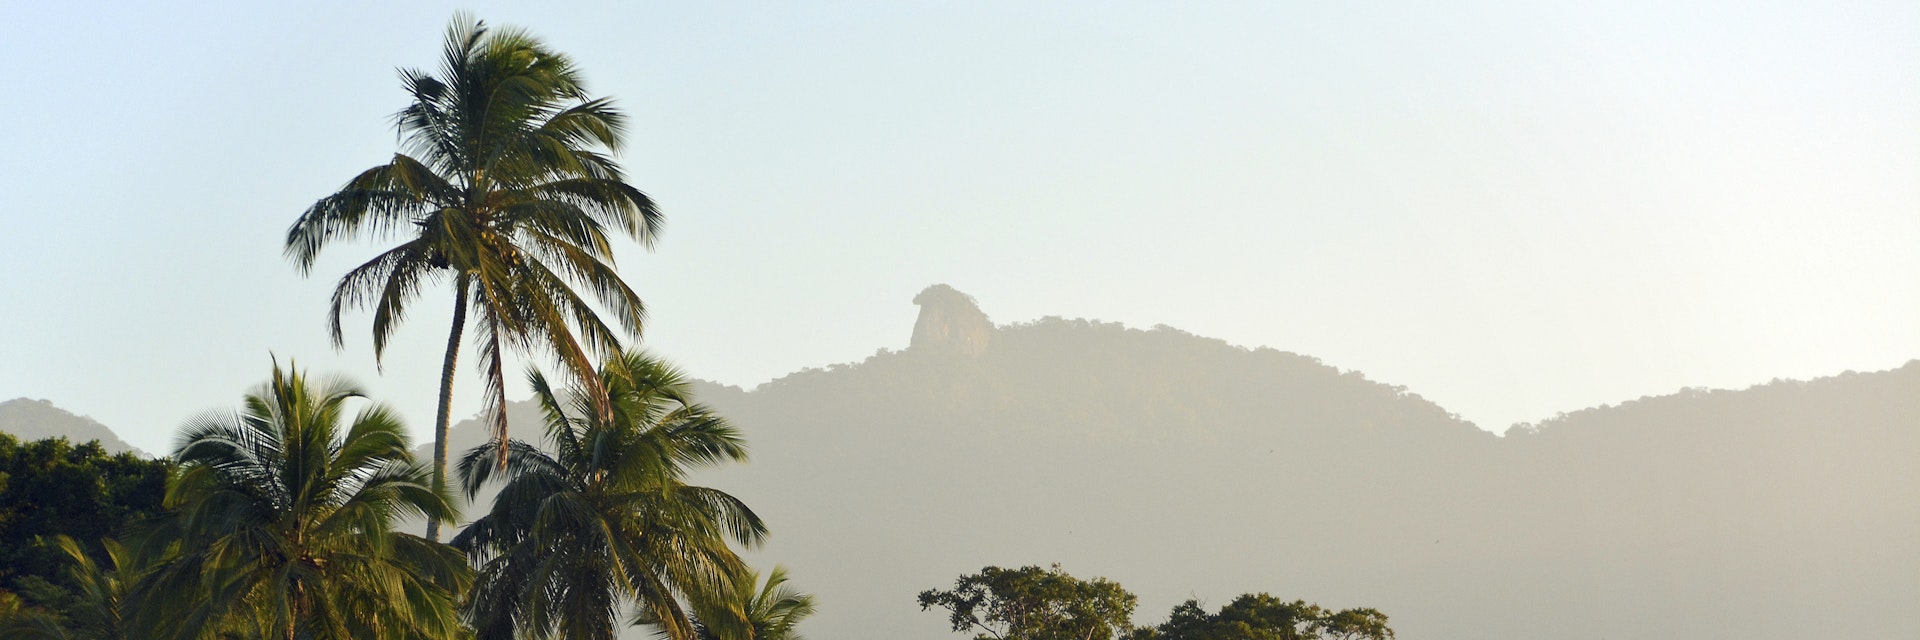 Coastal rainforest of Brazil's Costa Verde with Mt Pico do Papagaio, Ilha Grande, State of Rio de Janeiro, Brazil